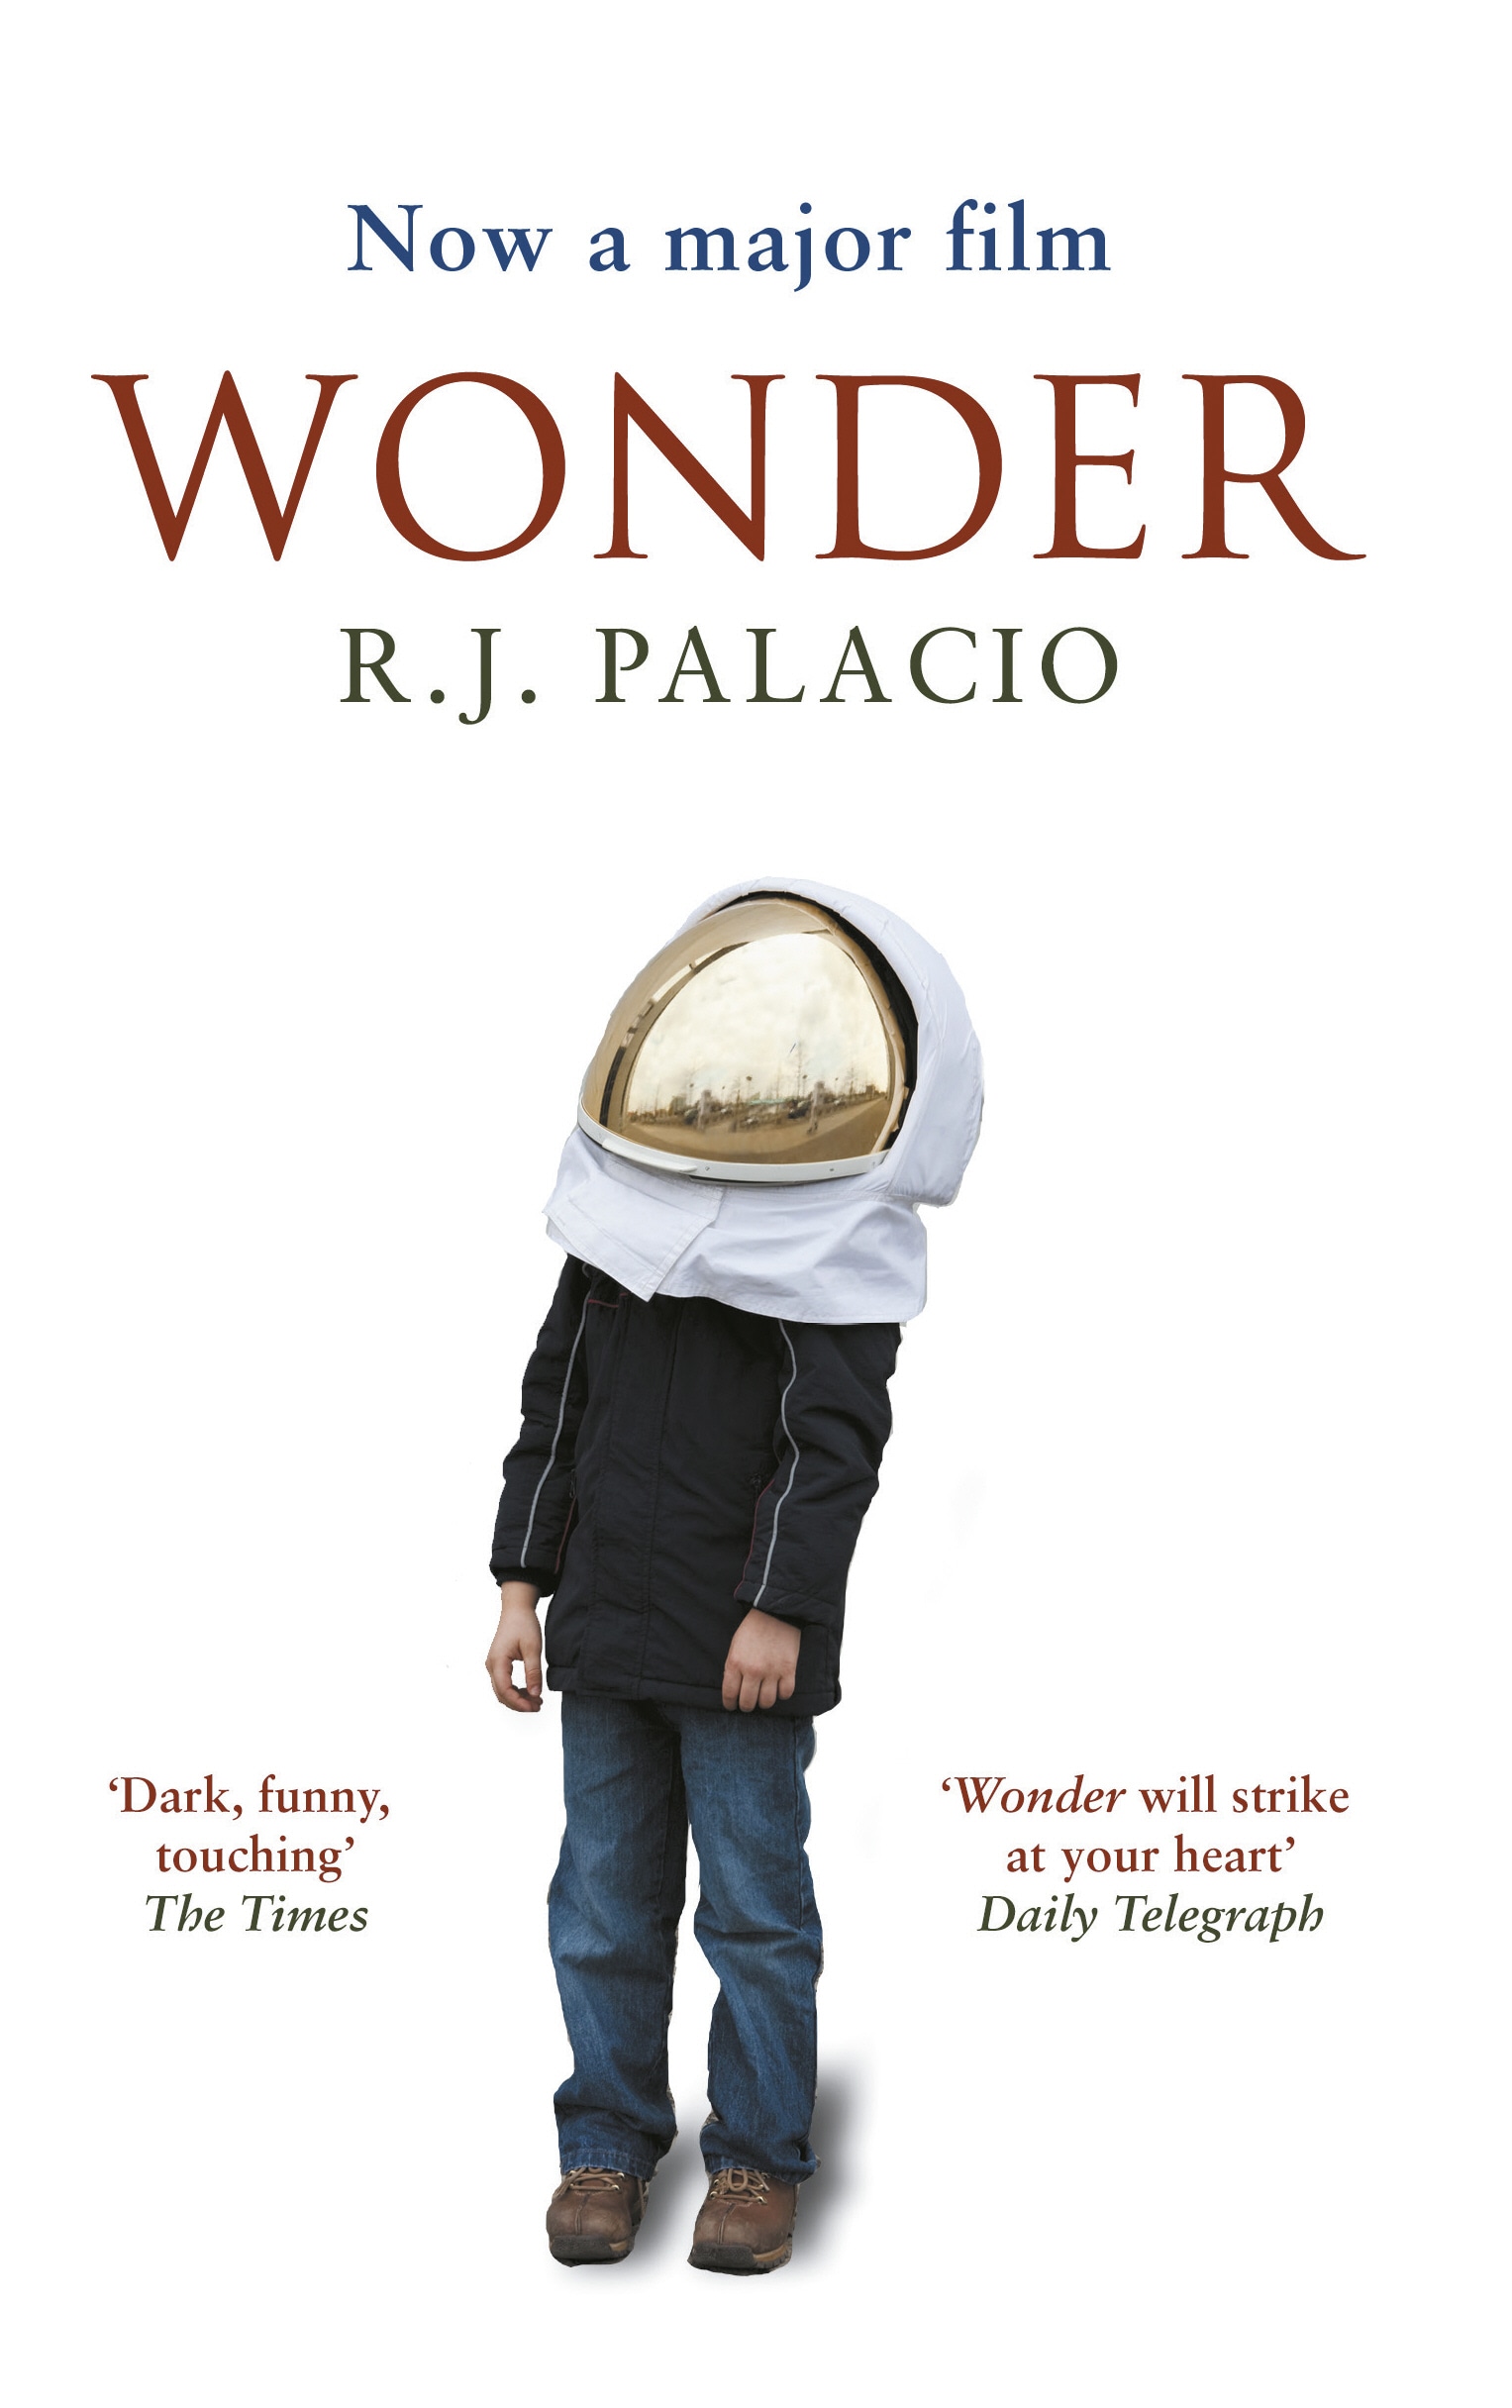 Book “Wonder” by R J Palacio — August 1, 2013